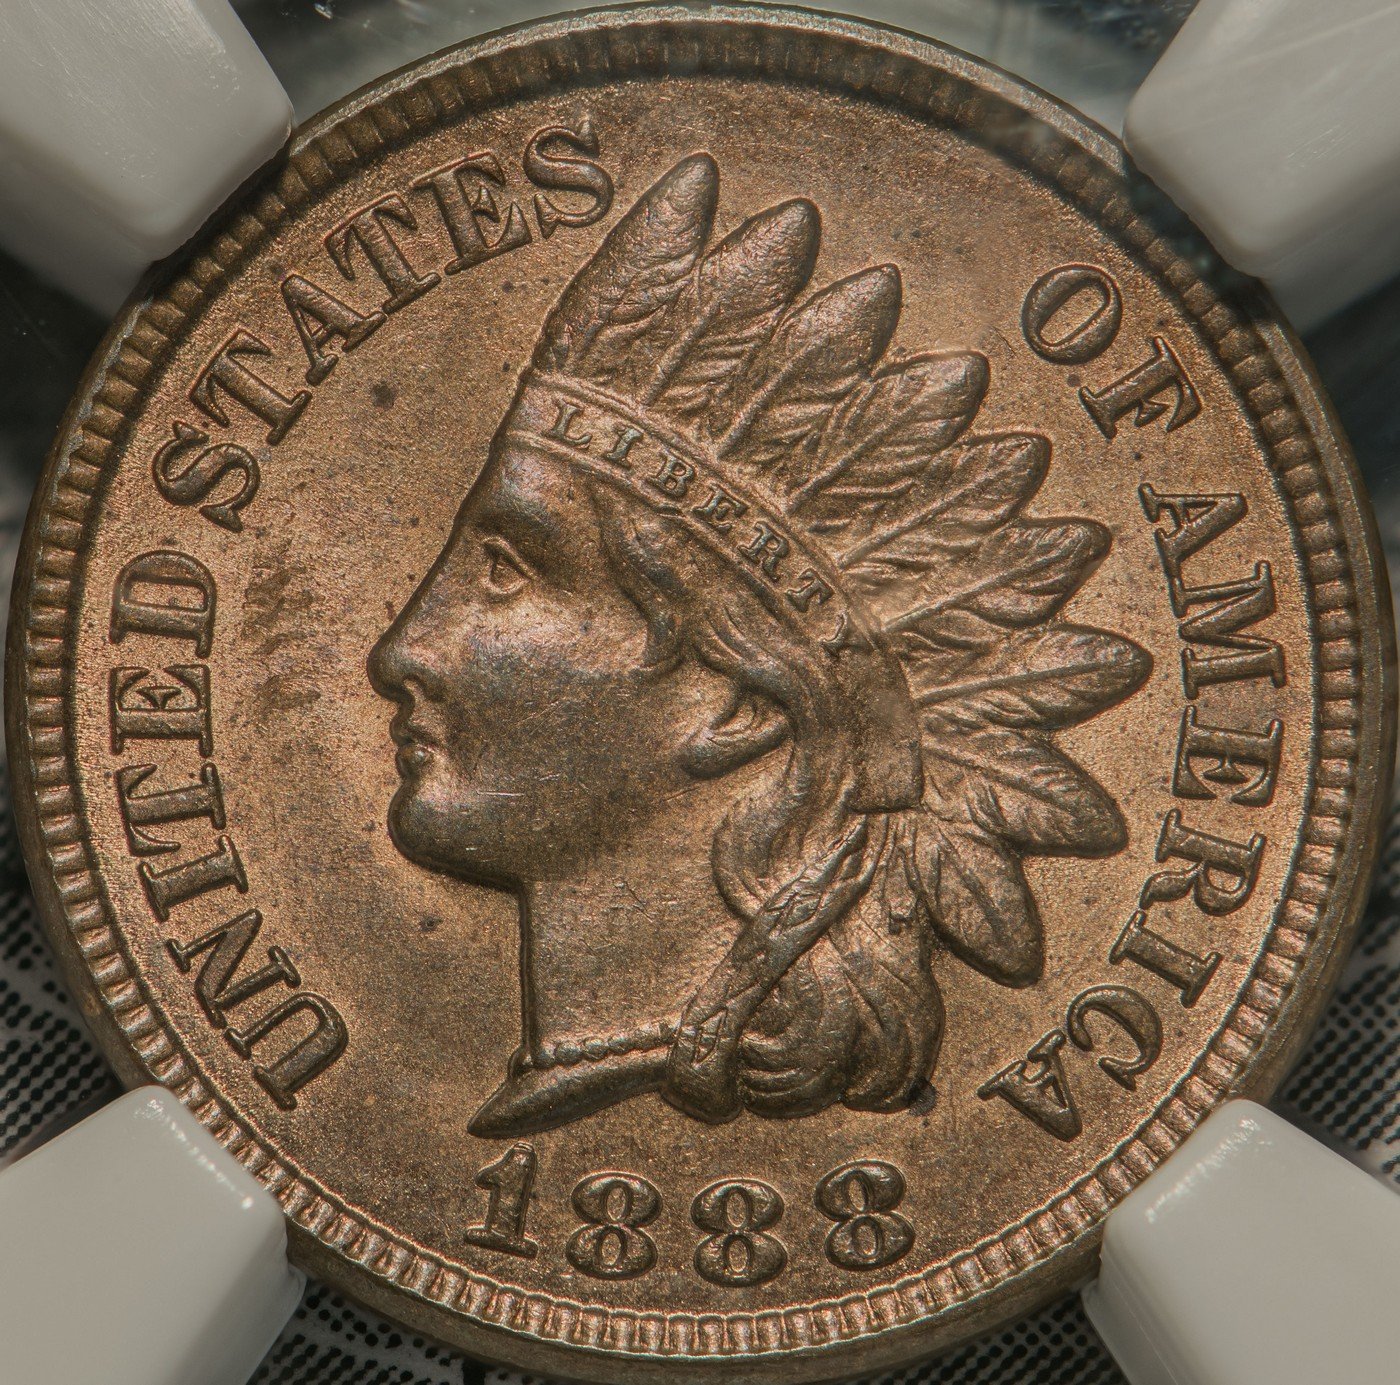 1888 RPD-009 Indian Head Penny - Photo by Kurt Story